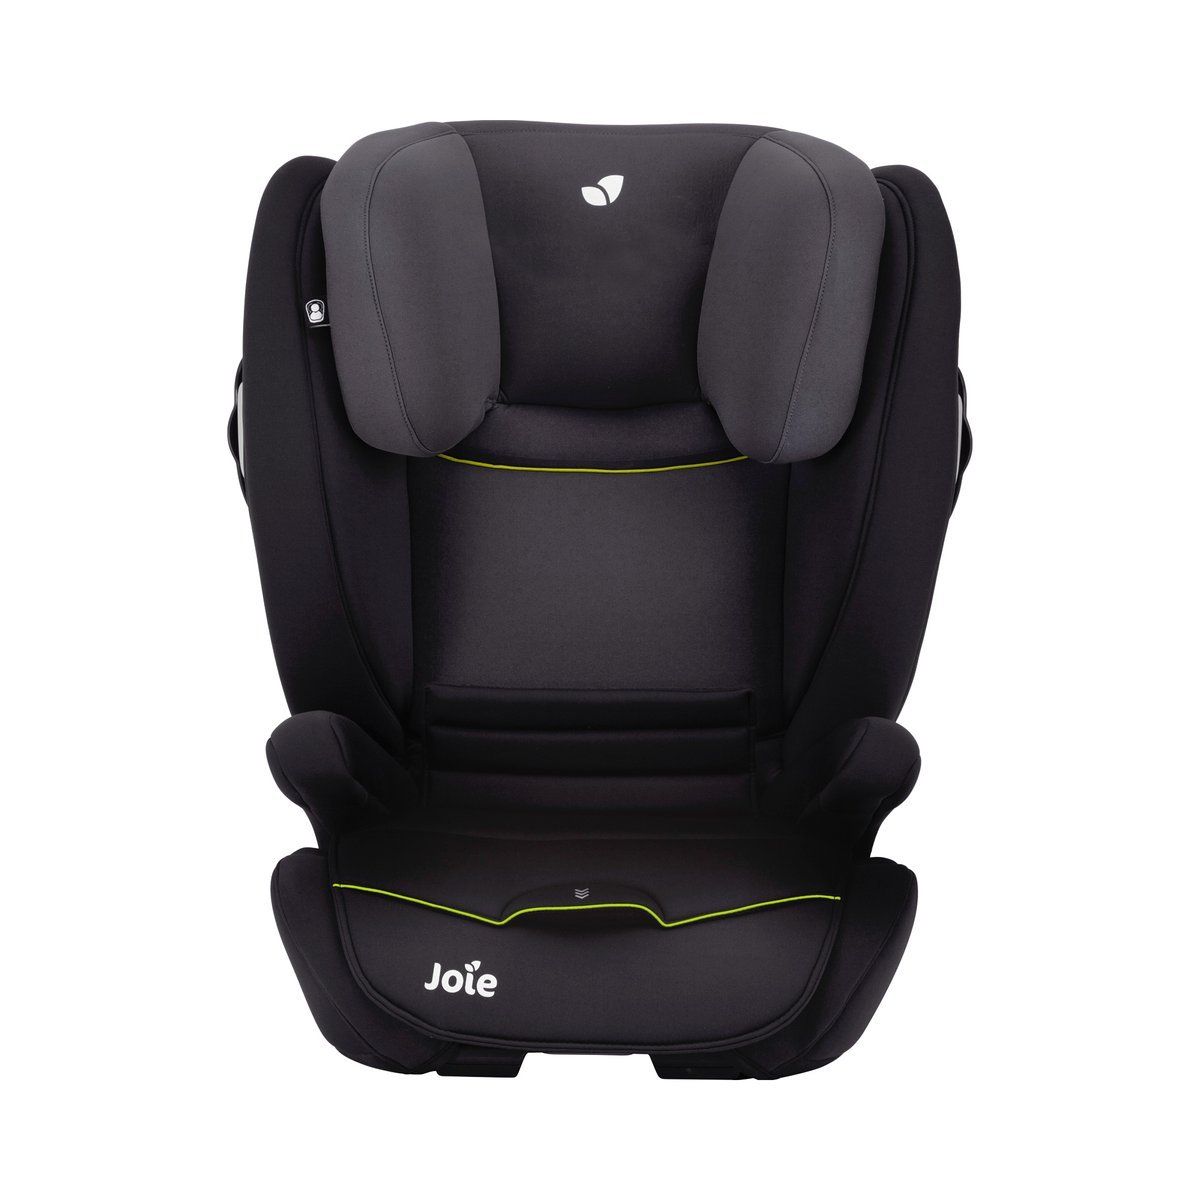 Joie dualloTM child seat